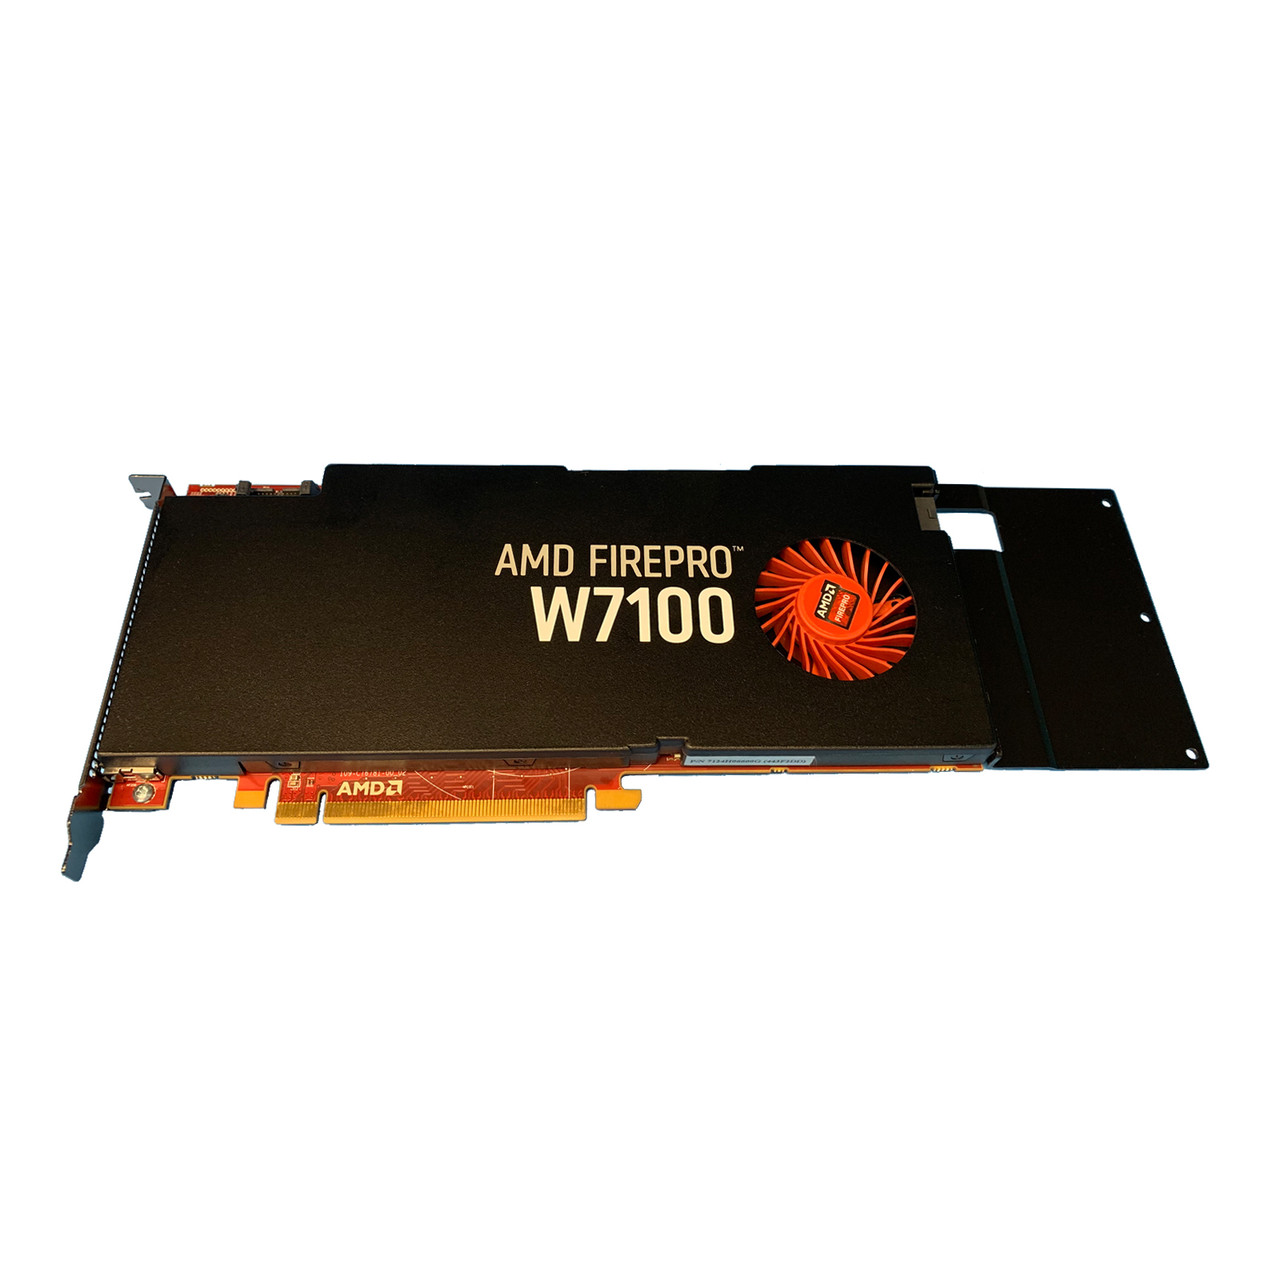 Dell KVMR4 AMD FirePro W7100 8GB Graphics Card